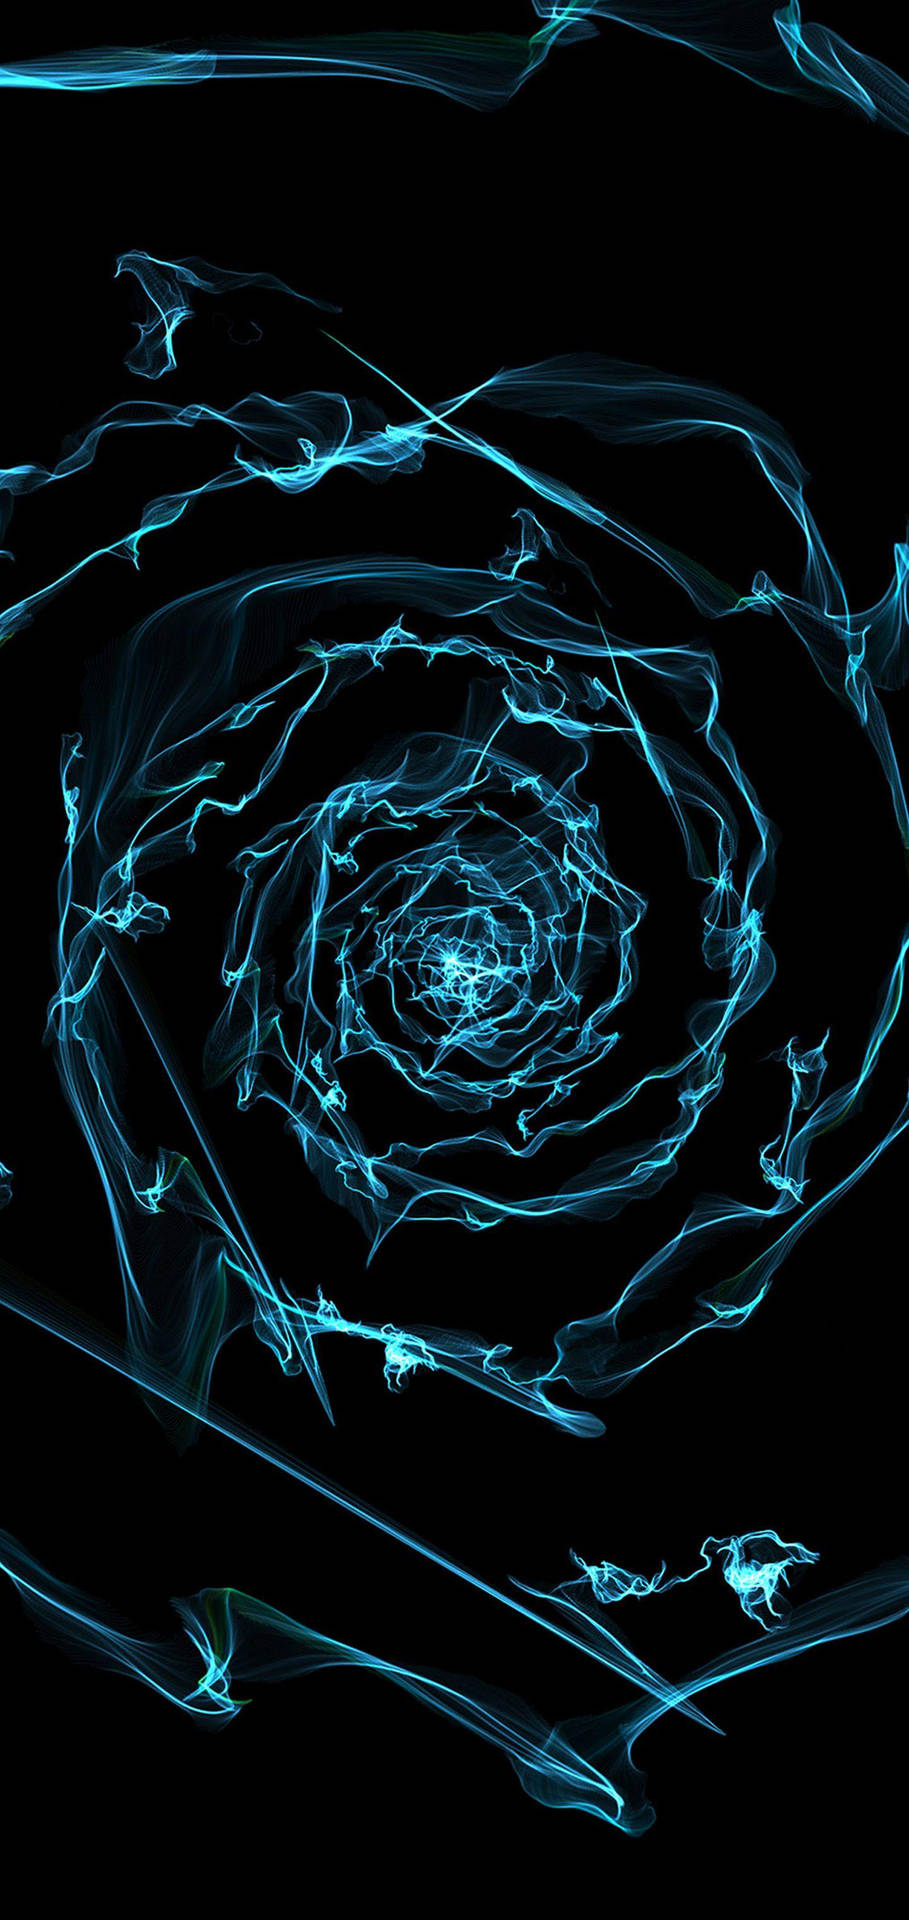 Spiral Abstract Galaxy S10 Wallpaper